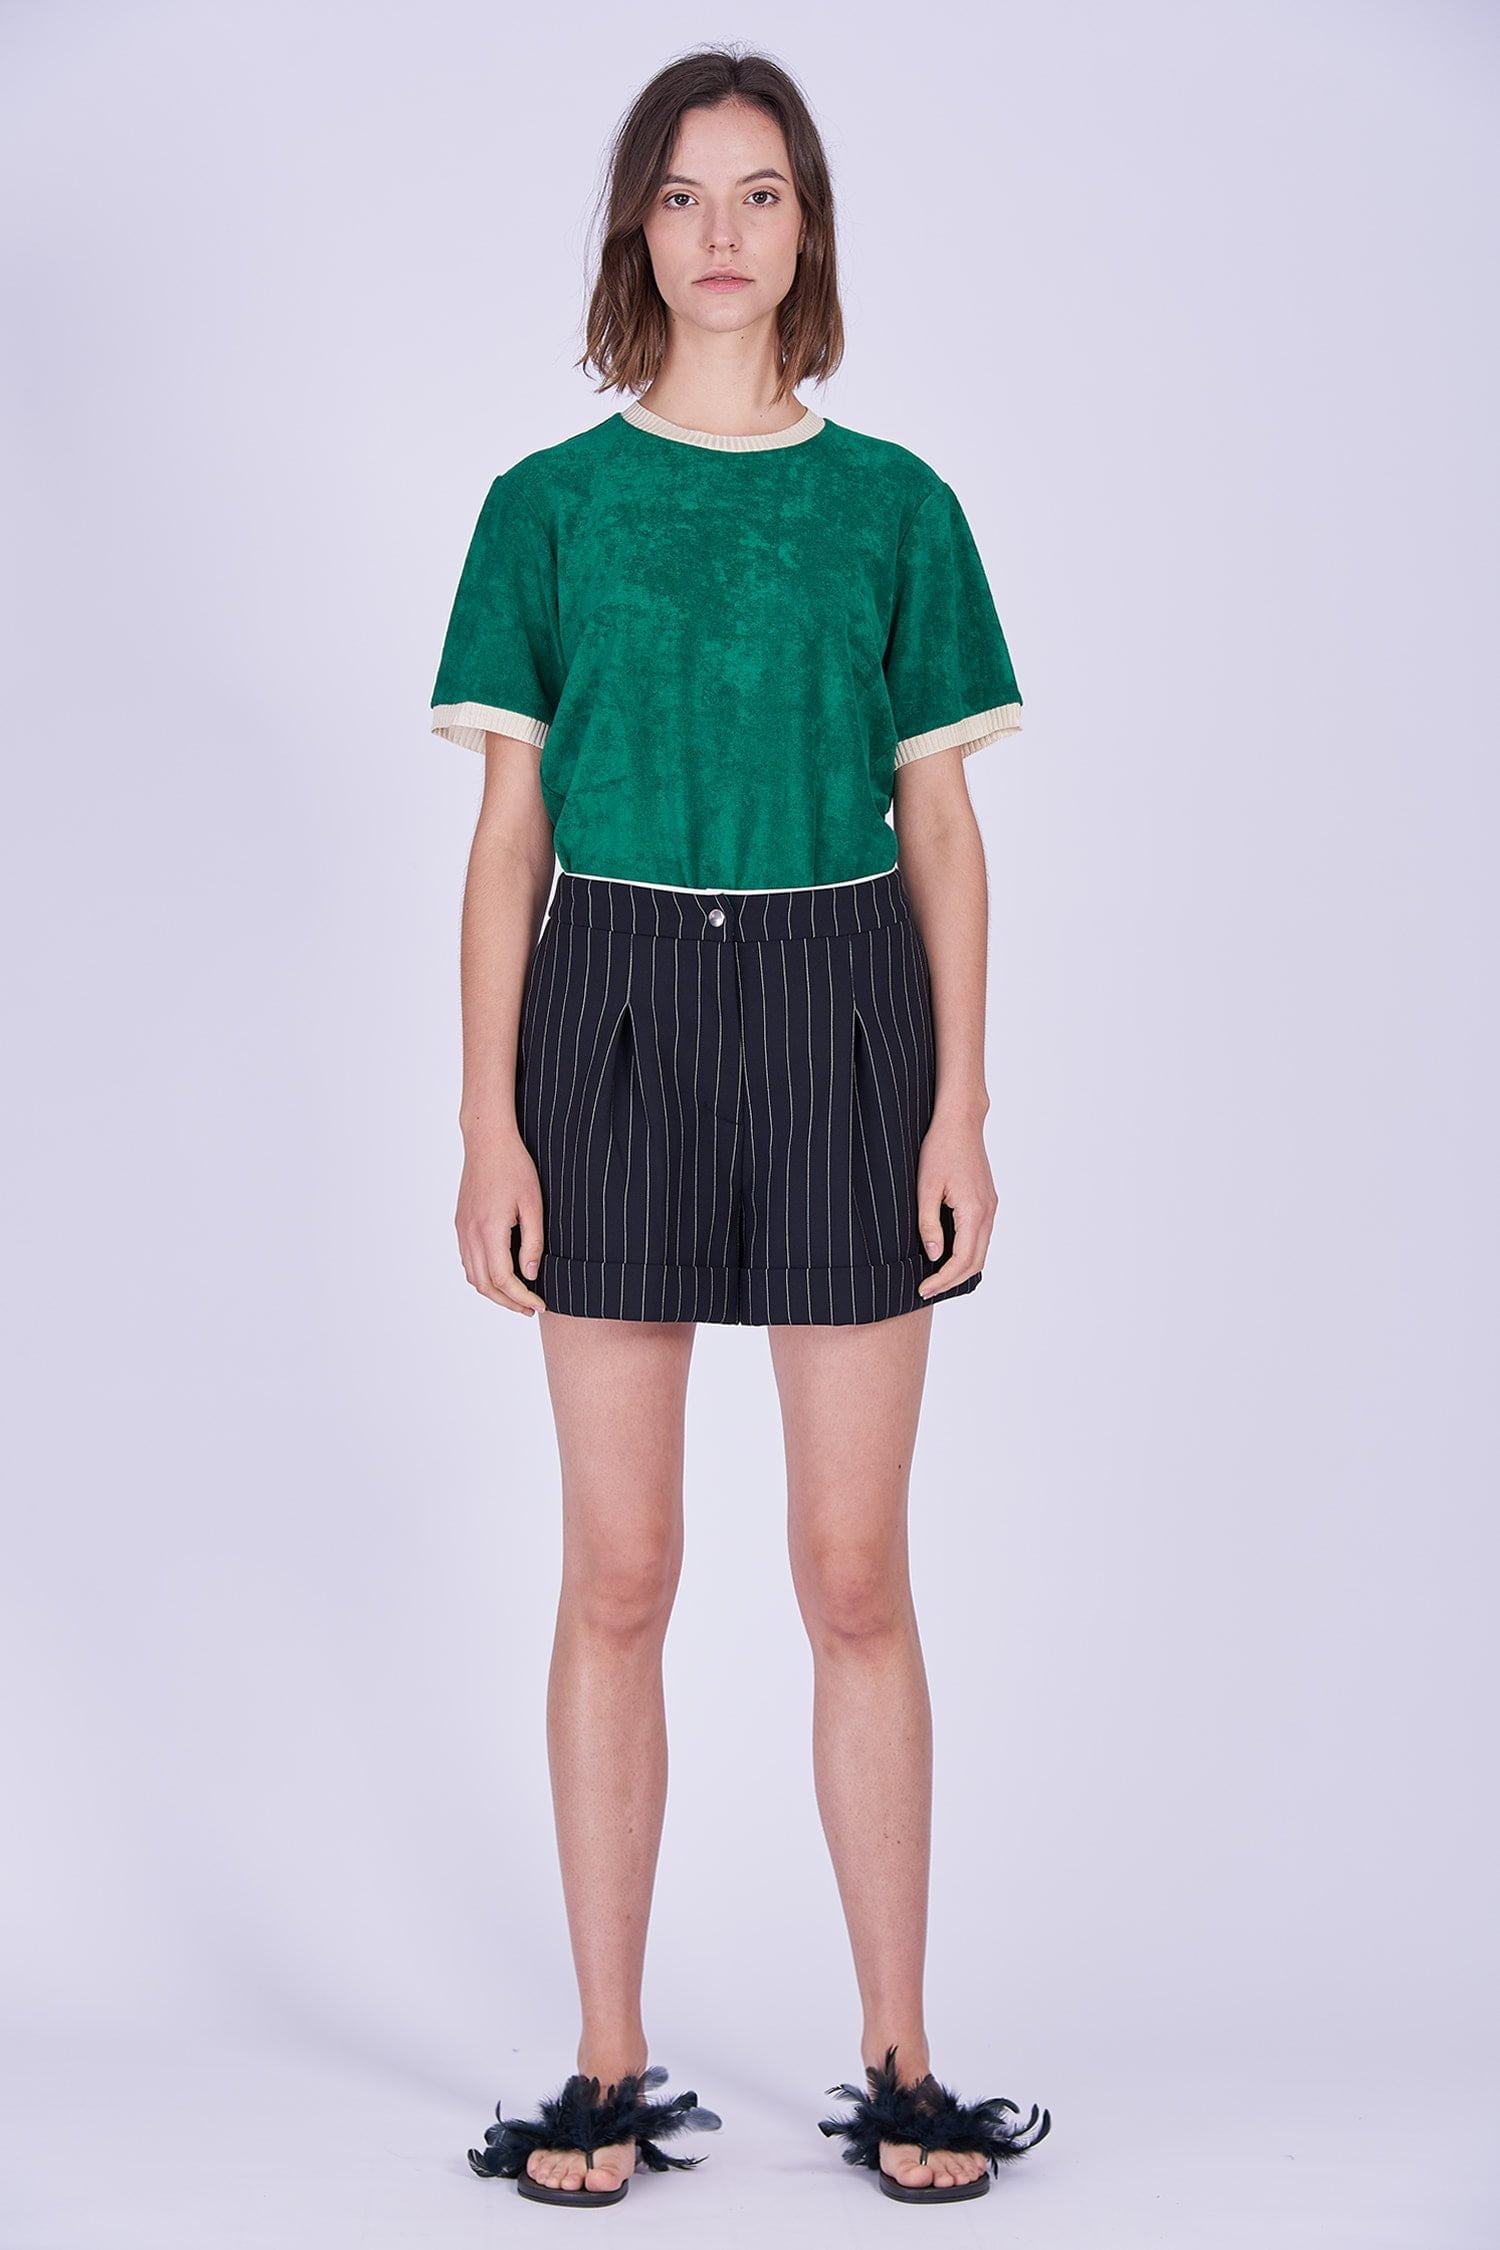 Acephala Ps2020 Black Striped Shorts Green T Shirt Zielony Czarne Szorty Paski Front